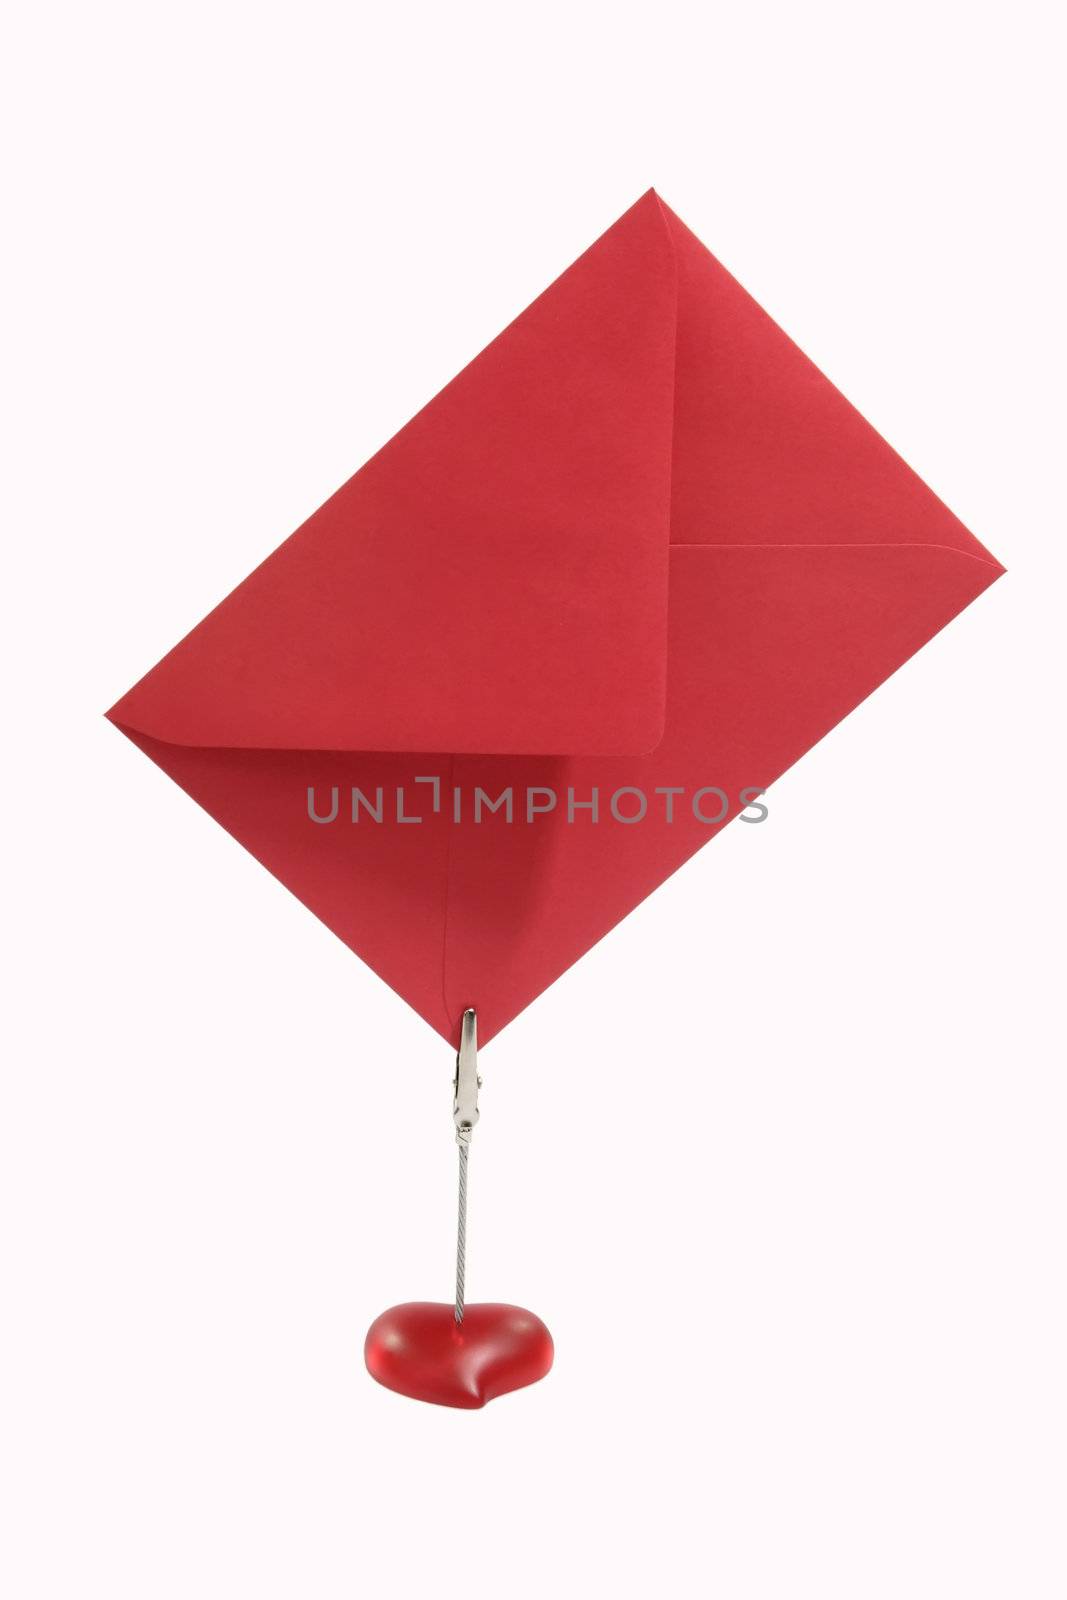 Red Envelope by Teamarbeit